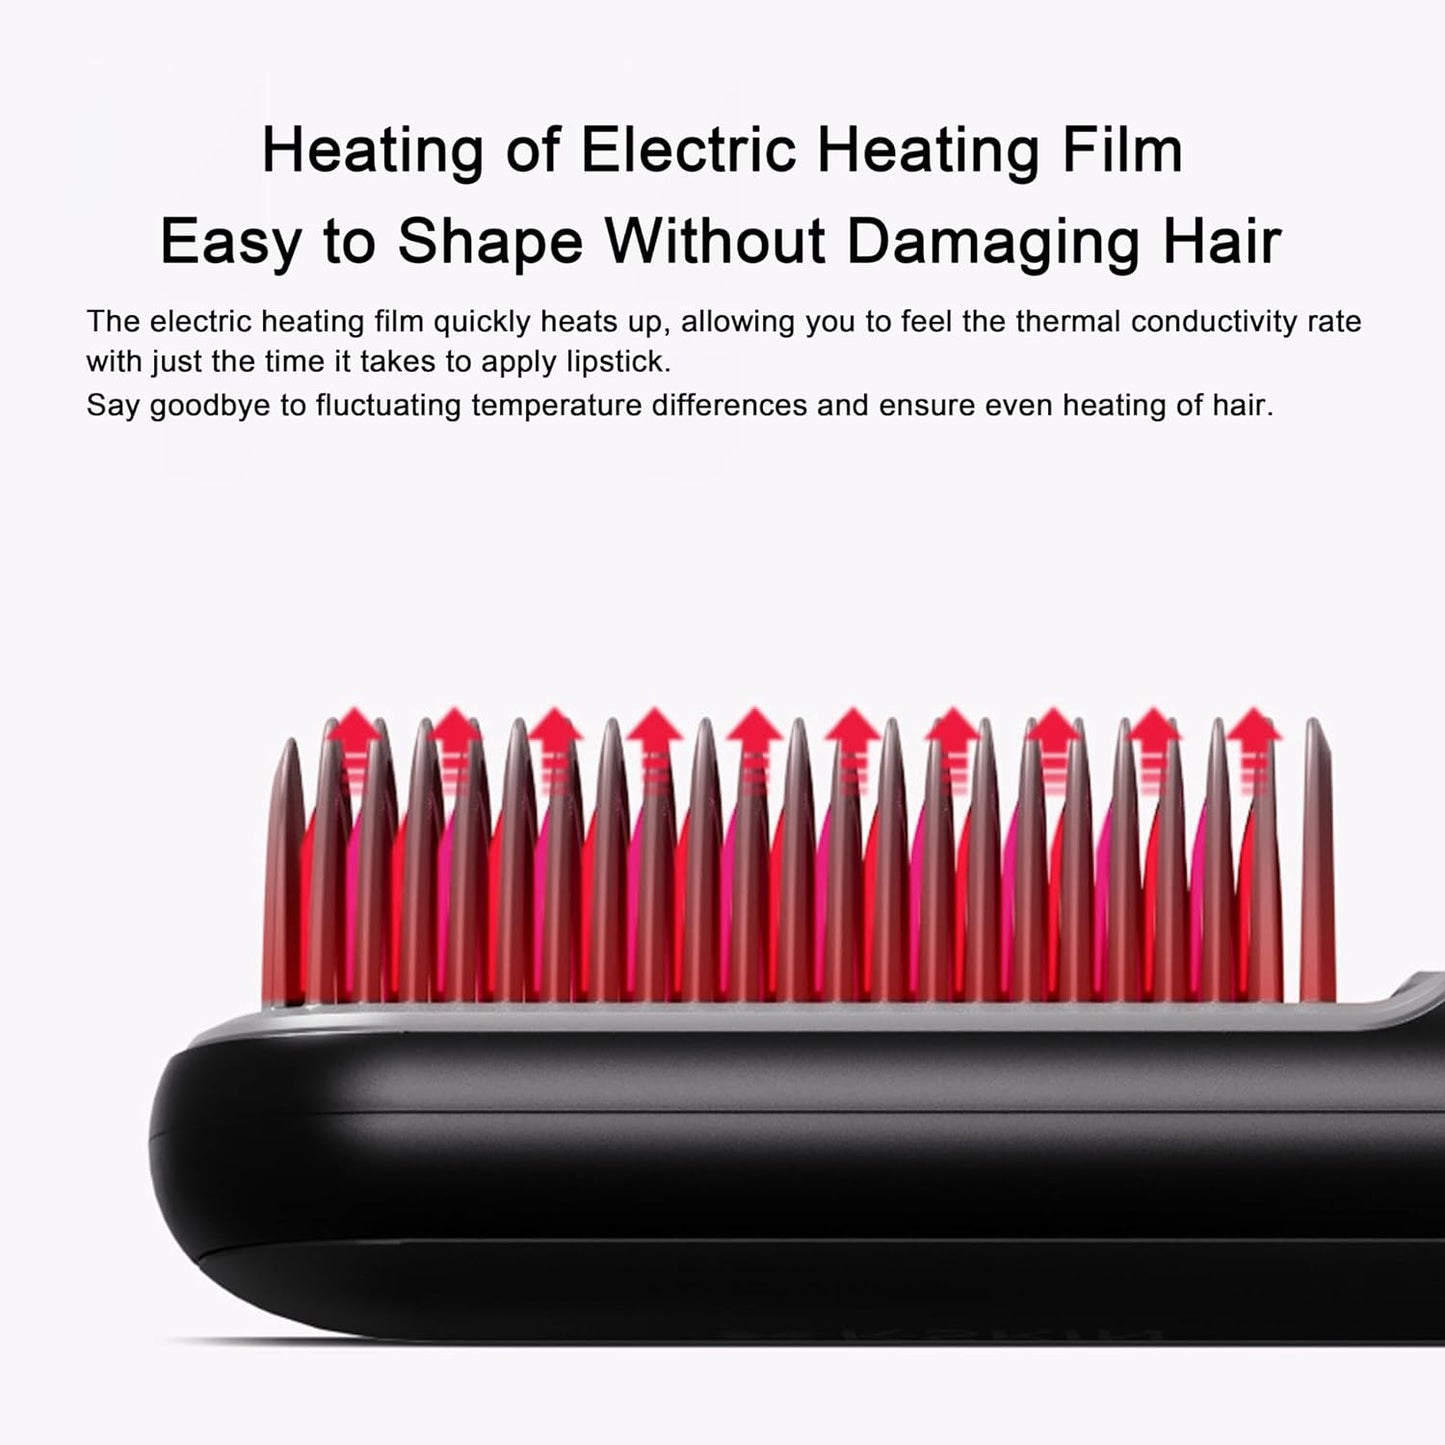 Portable cordless Hair Straightener Brush - فرشاة شعر ذكية تعمل بالشحن بتقنية الايونات